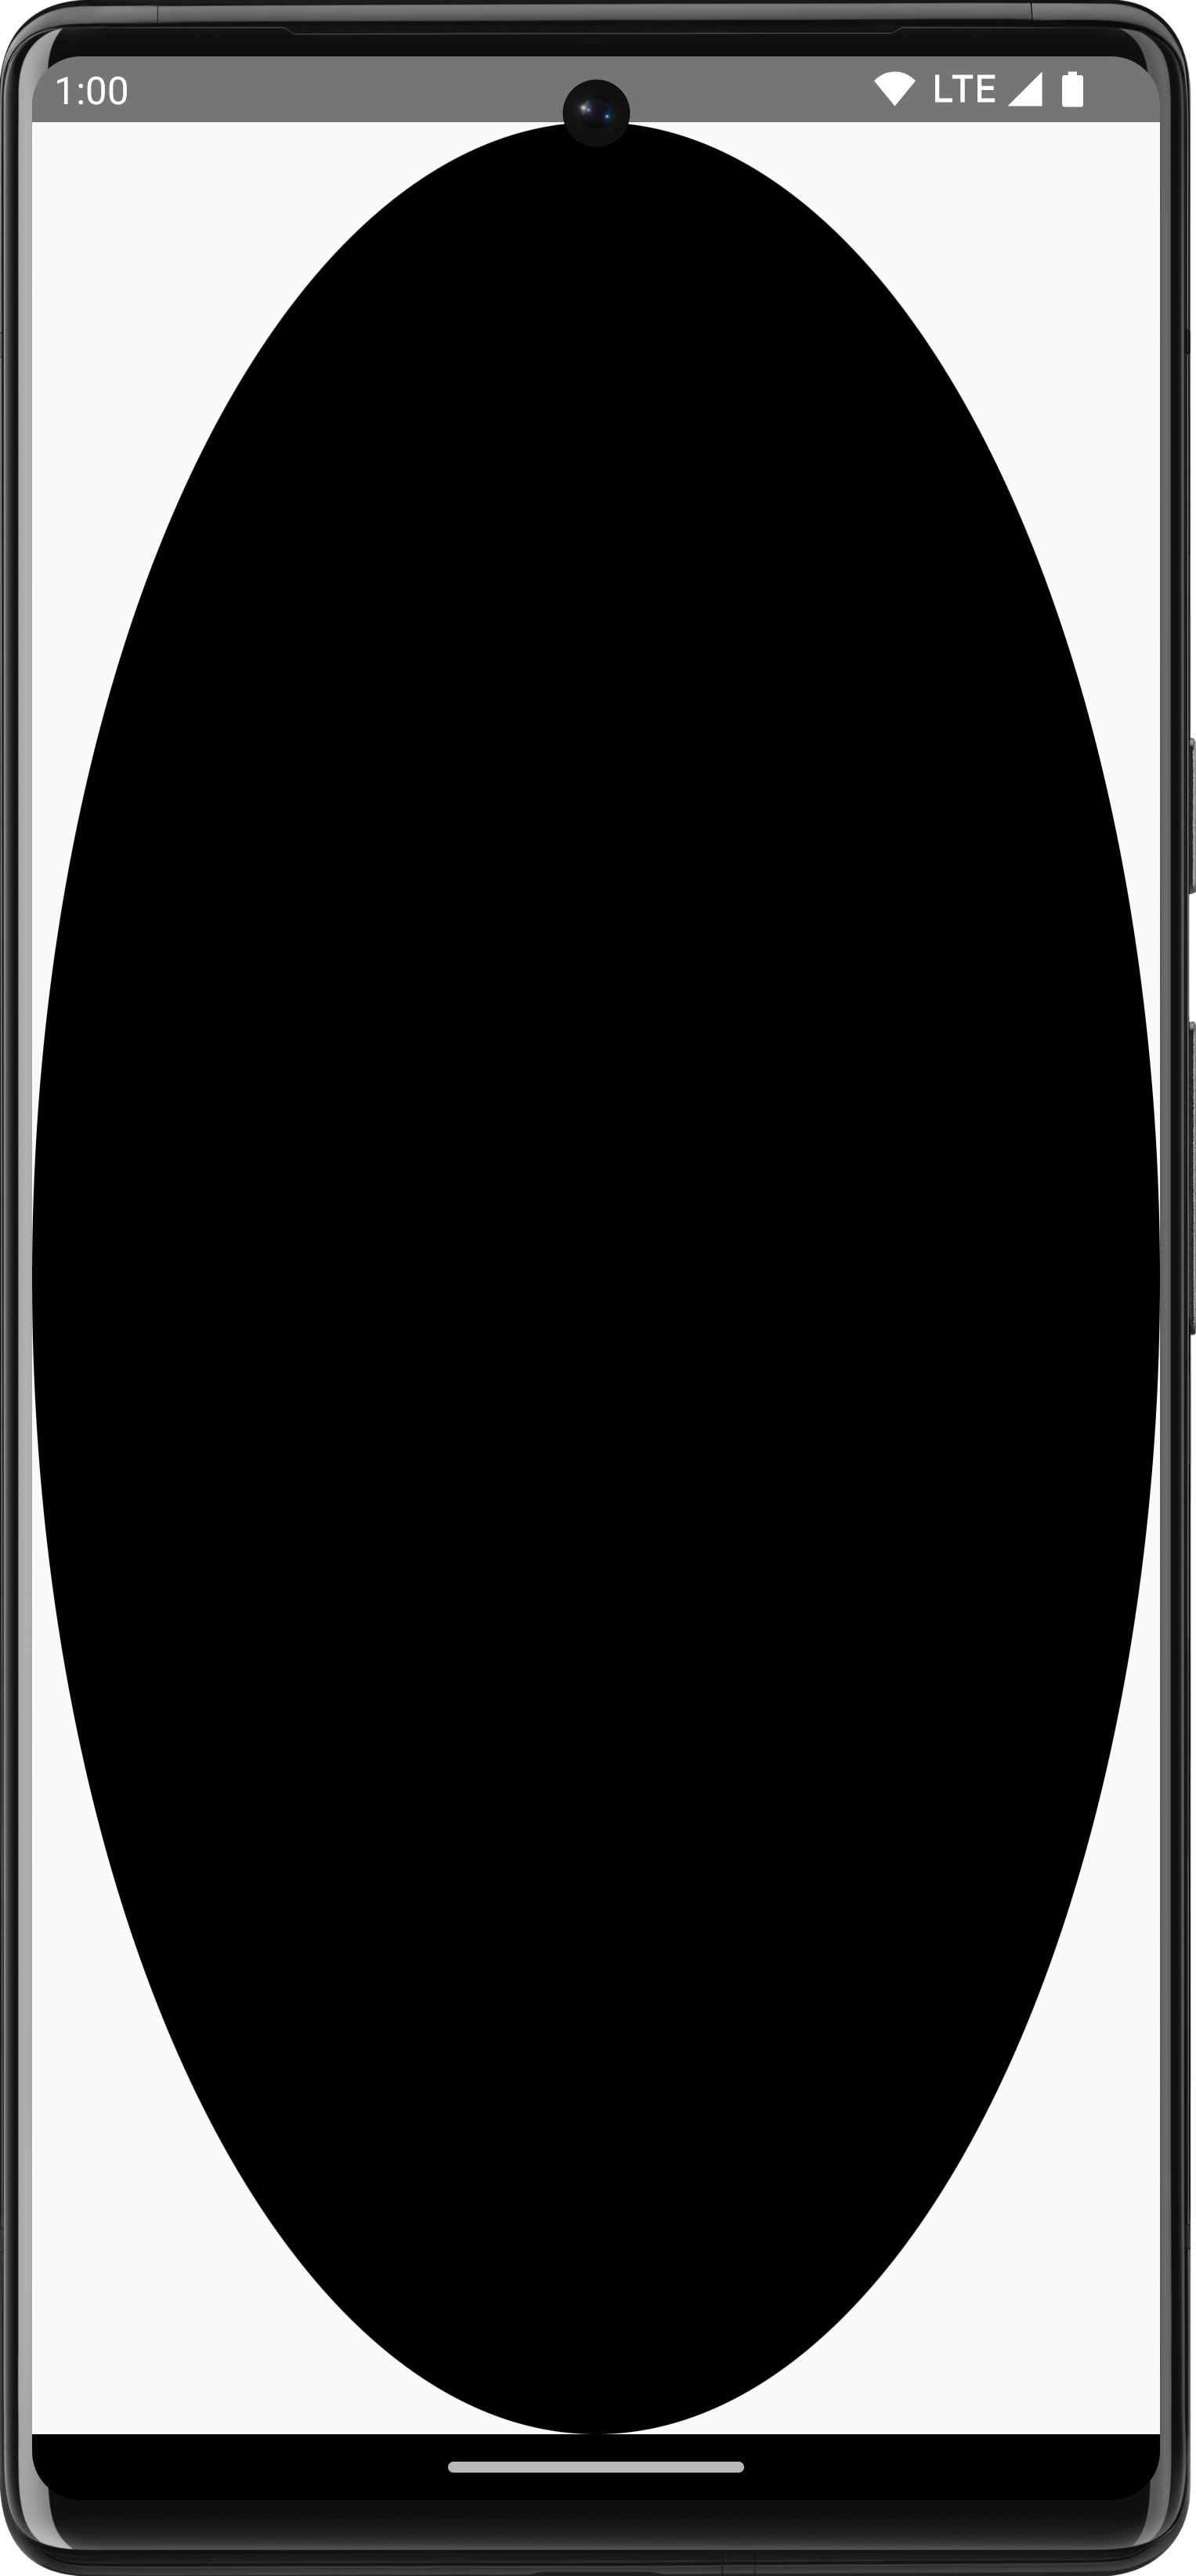 Un objeto ShapeDrawable negro ovalado que ocupa el tamaño original